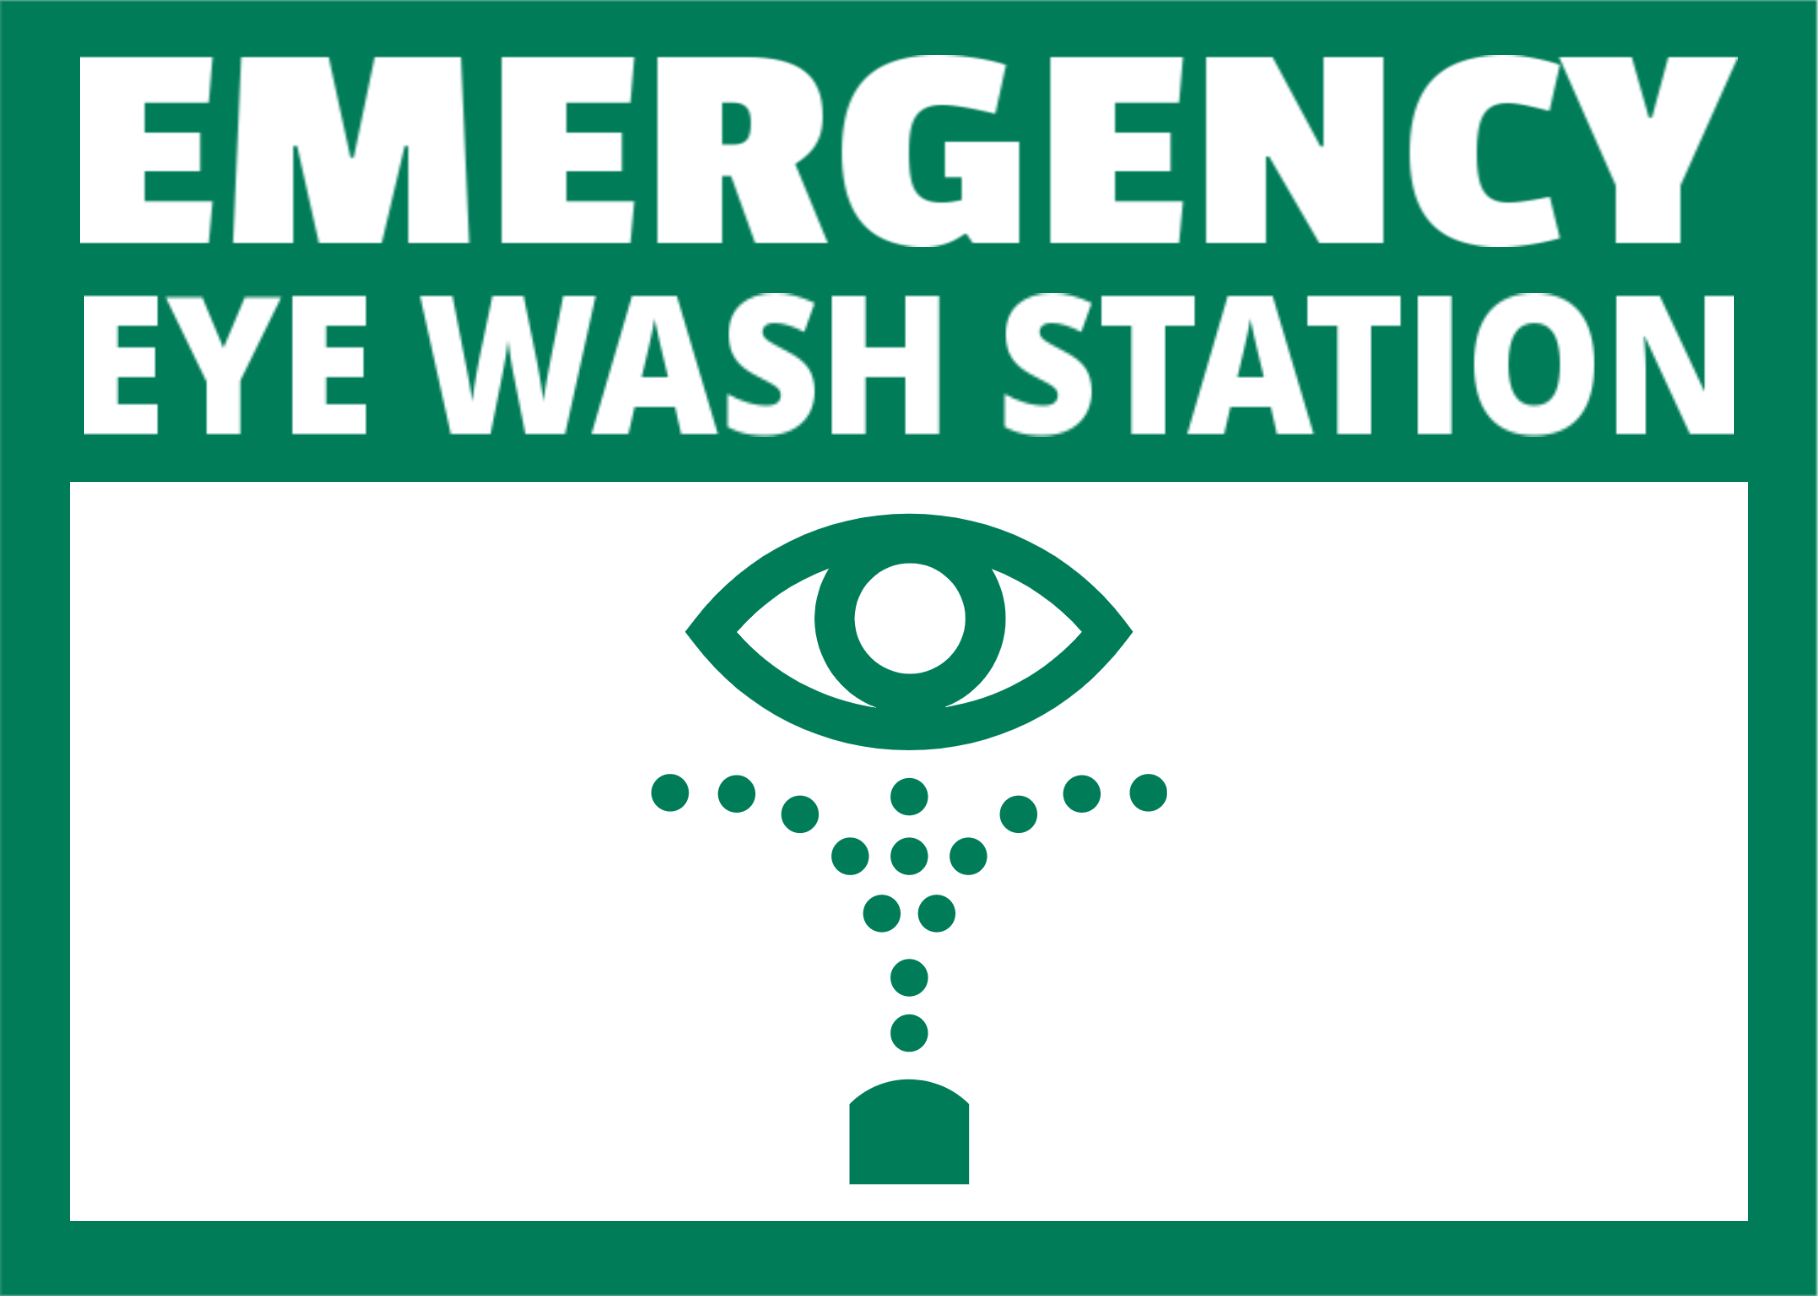 10 x 14 PVC Wall Sign, Health and Safety - Tags: Emergency Eye Wash Station, Sprinkler, Spray, Irritant, Lab, 